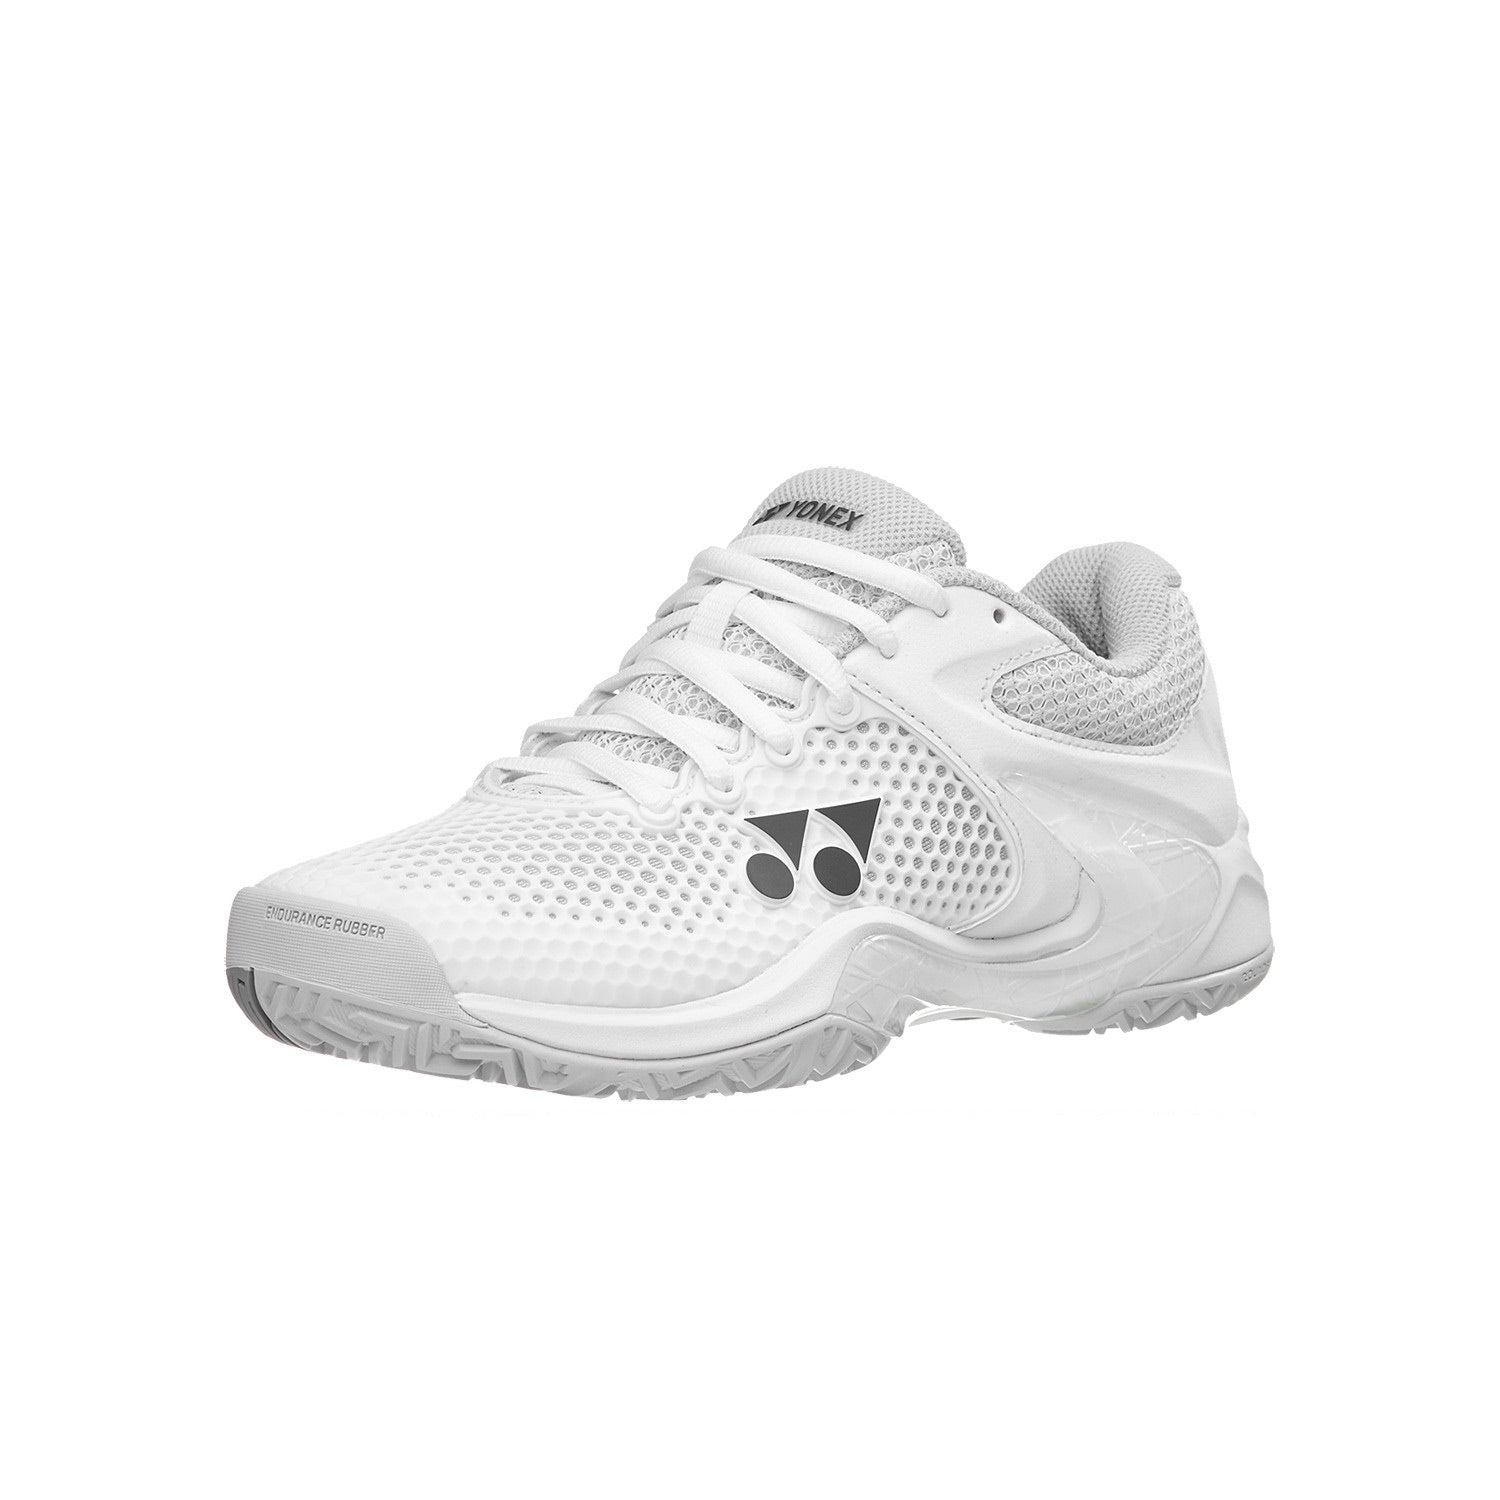 white tennis shoes 2019